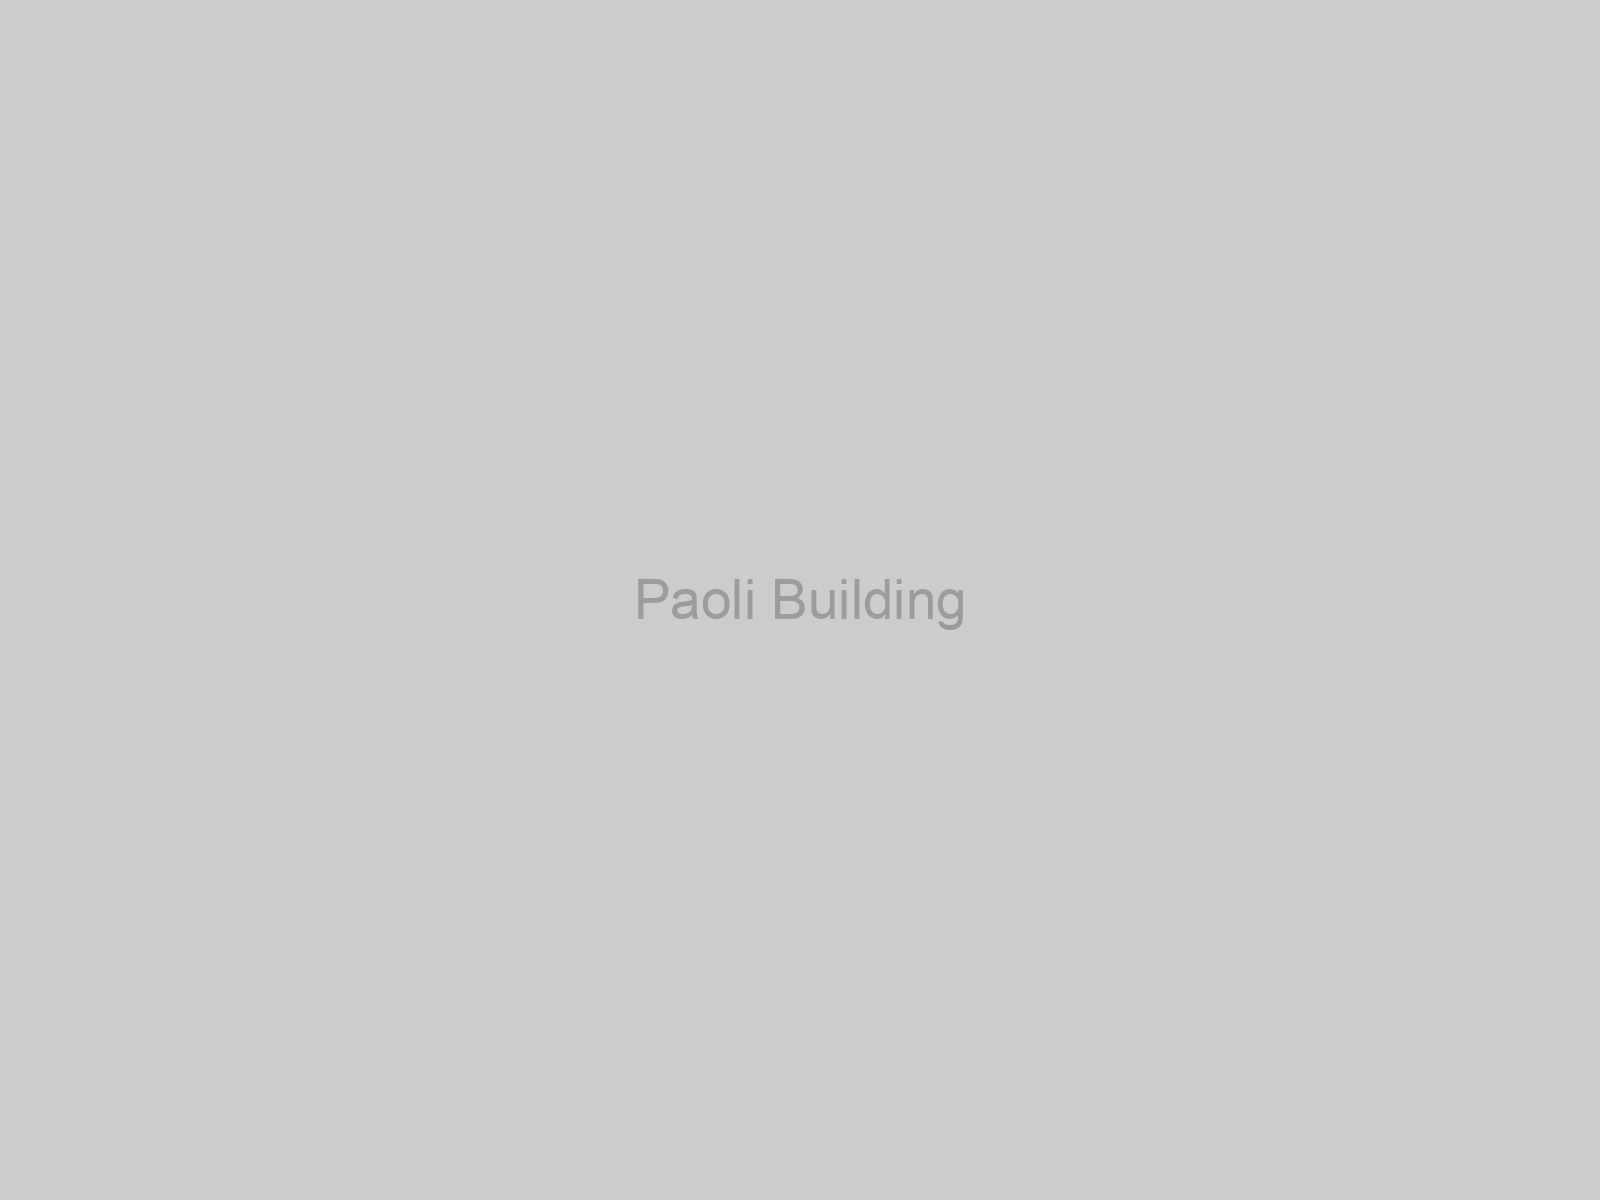 Paoli Building